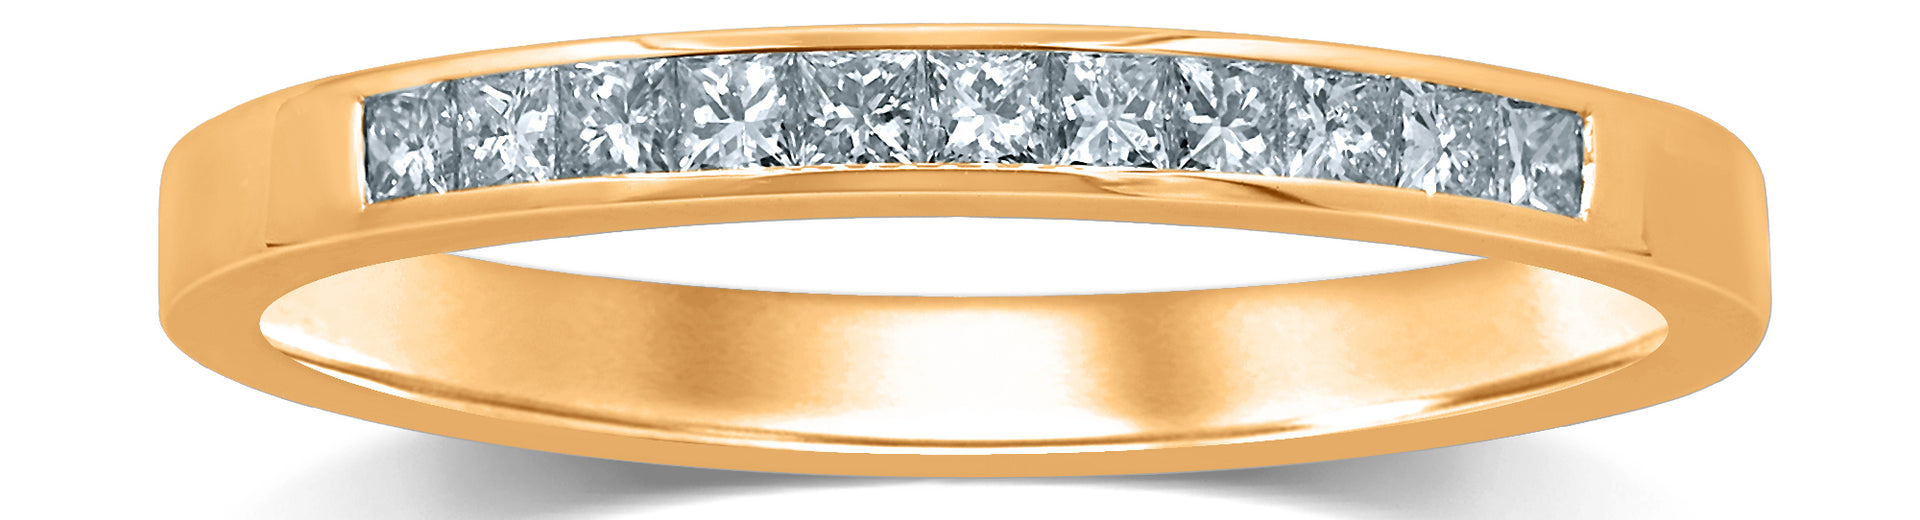 18ct Yellow Gold Princess Cut with 1/4 CARAT tw of Diamonds Ring